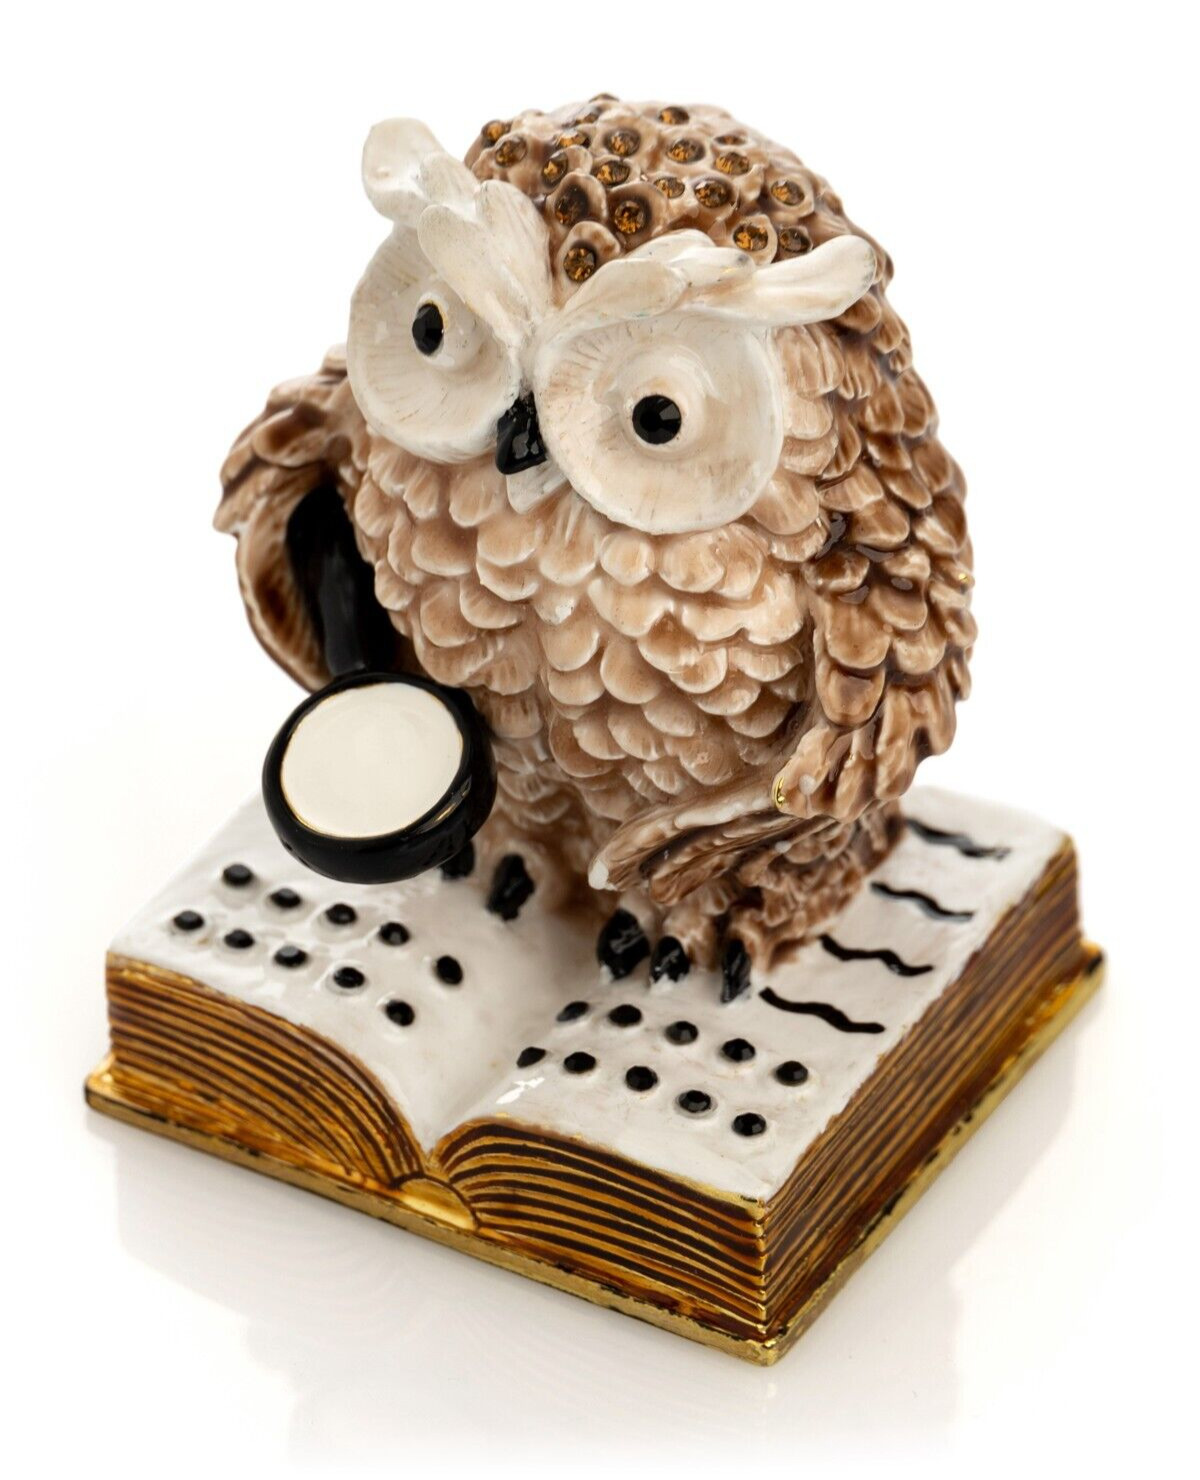 Keren Kopal Owl Reading a Book Trinket Box Decorated with Austrian Crystals